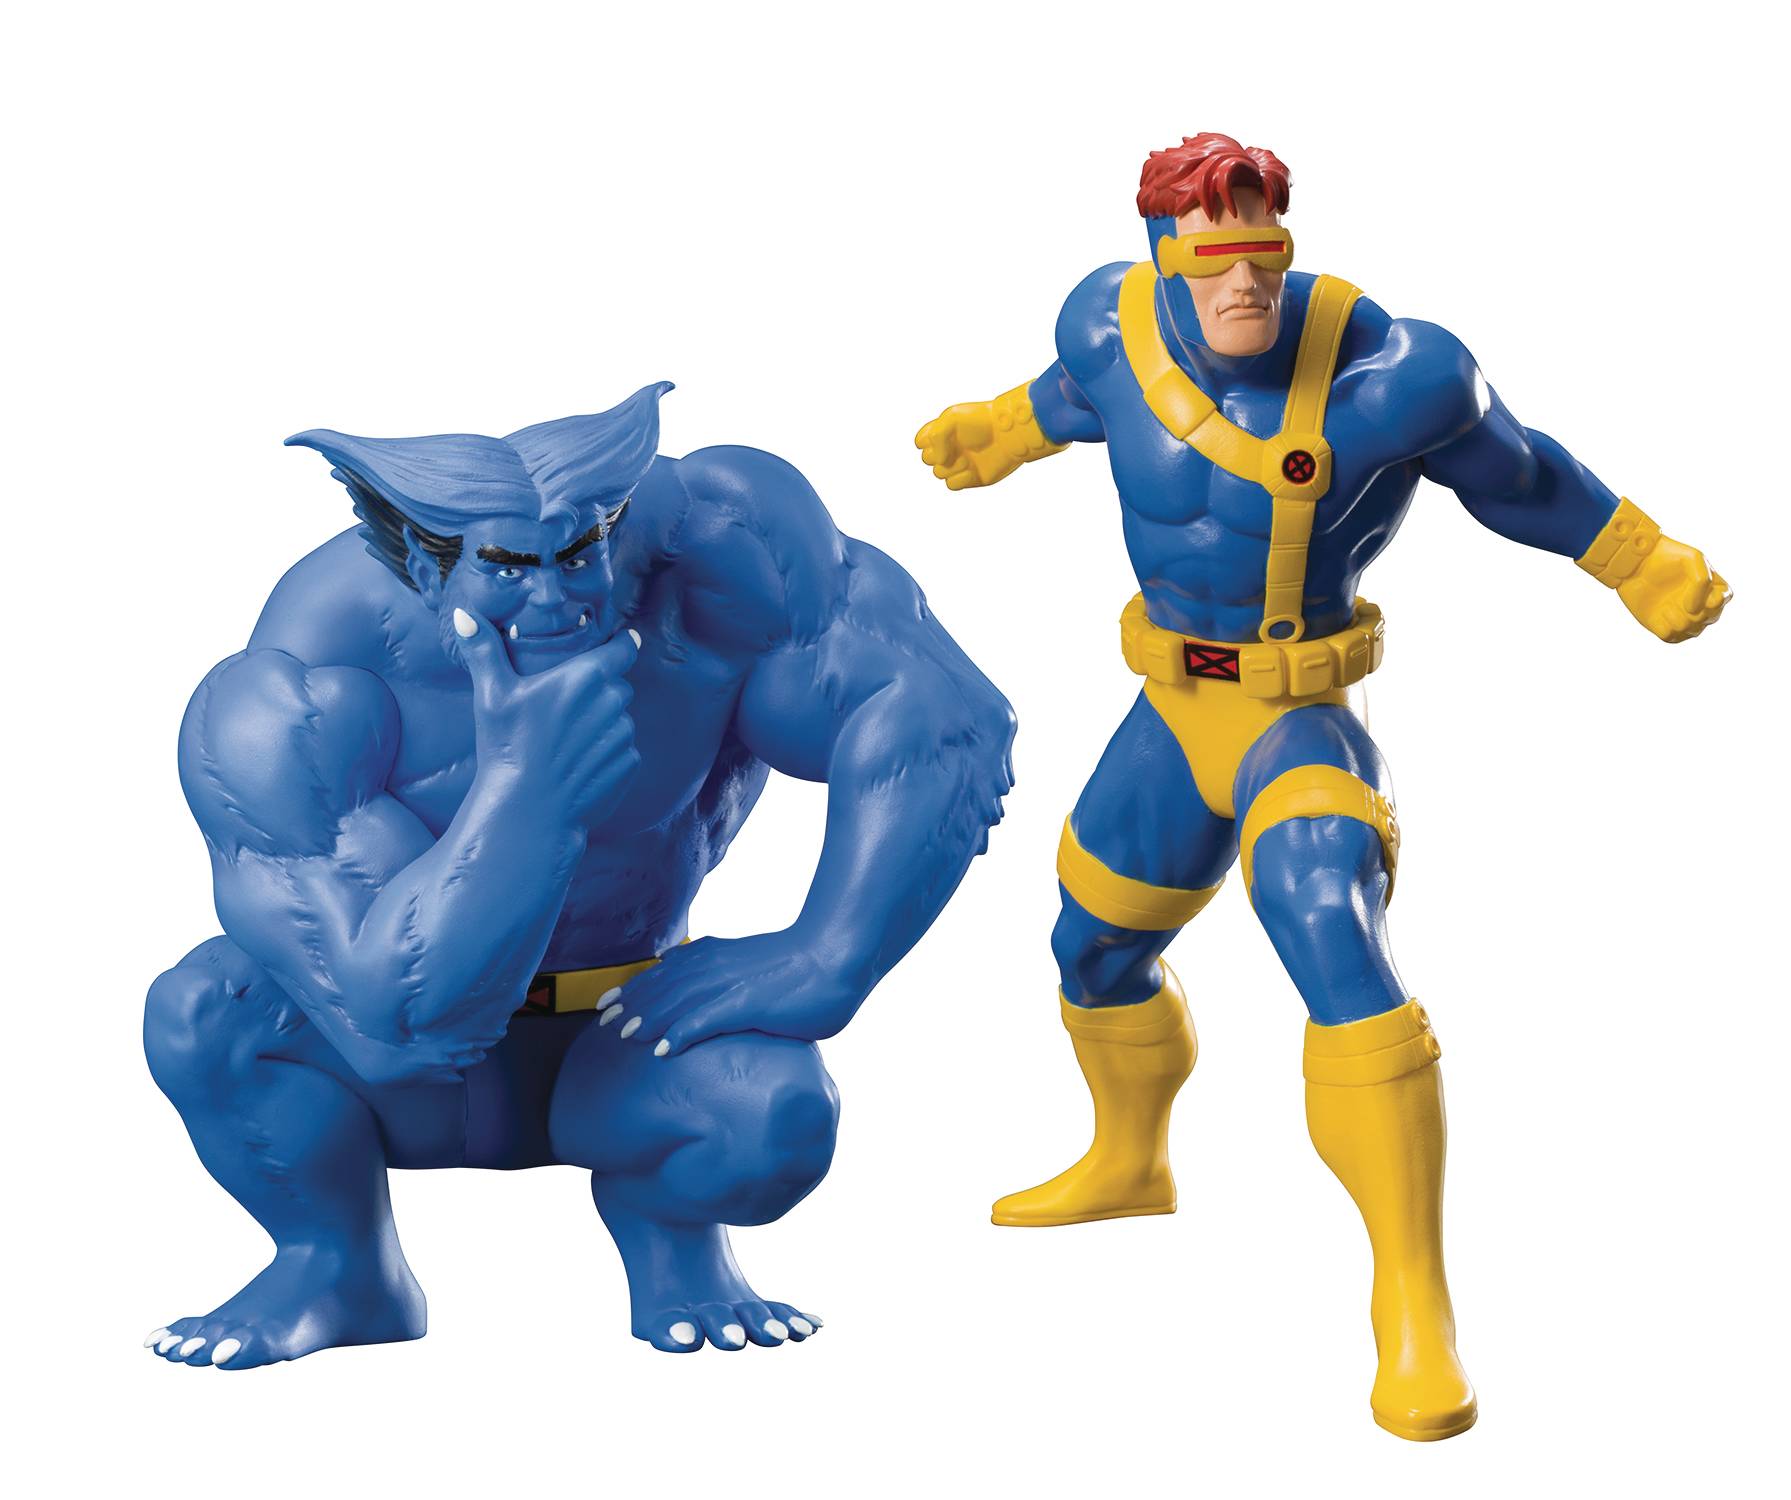 Marvel Cyclops & Beast 2 Pack Artfx+ Statue